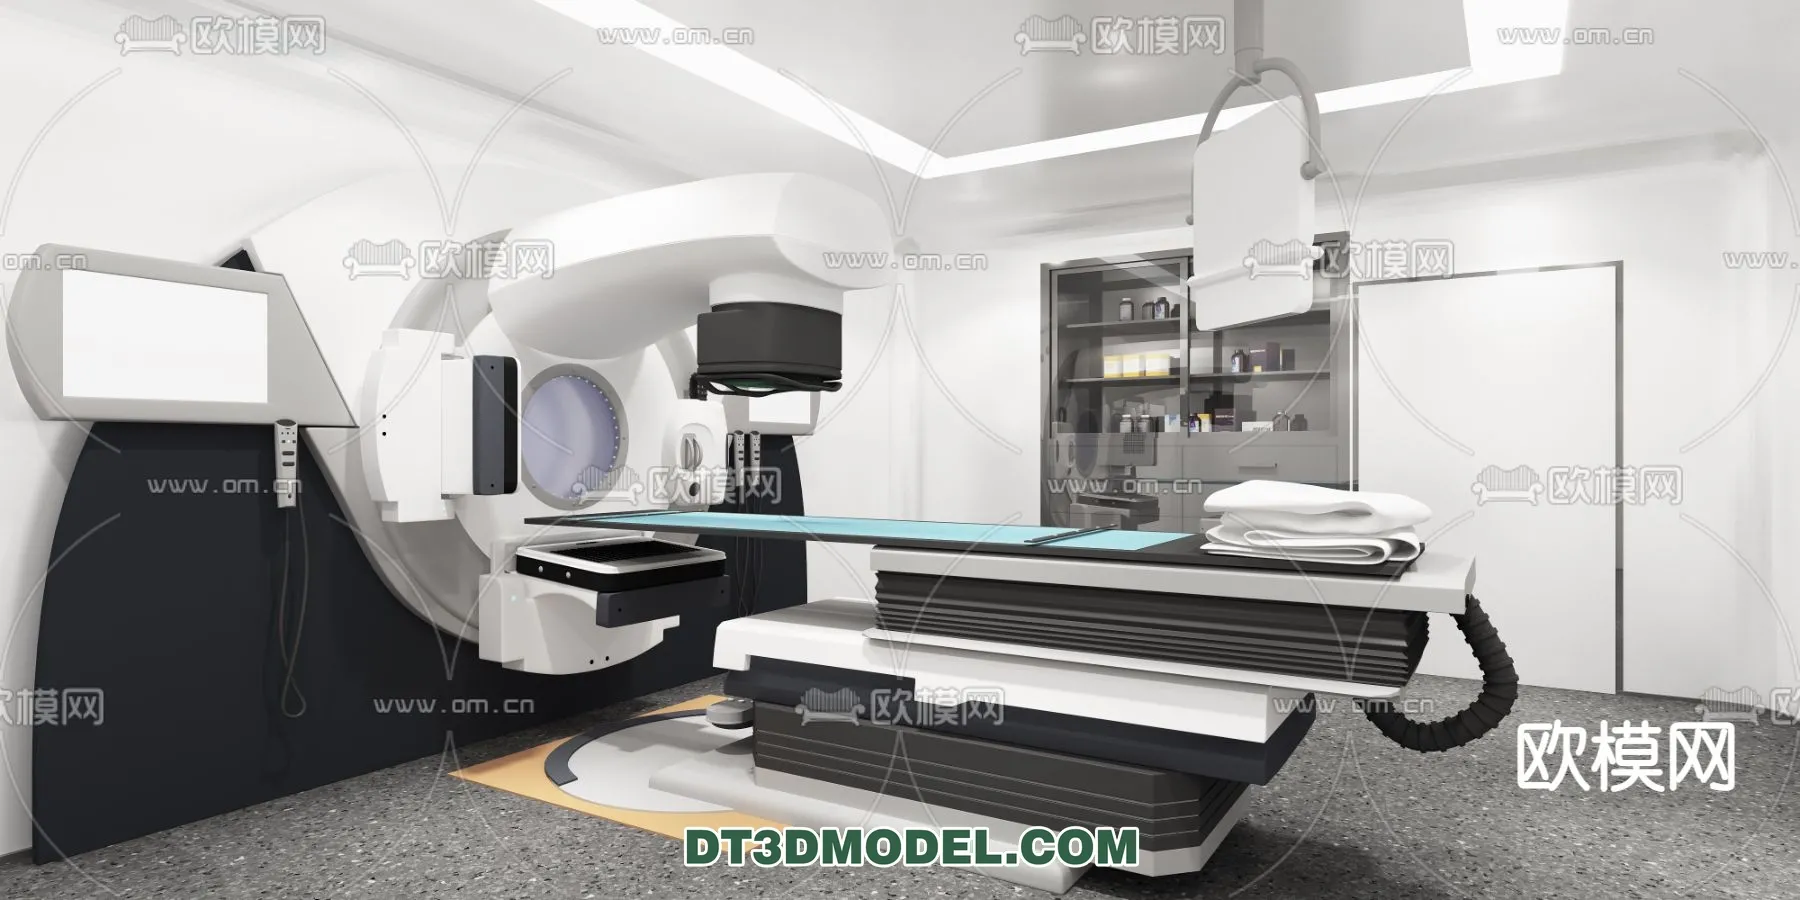 HOSPITAL 3D SCENES – MODERN – 0075